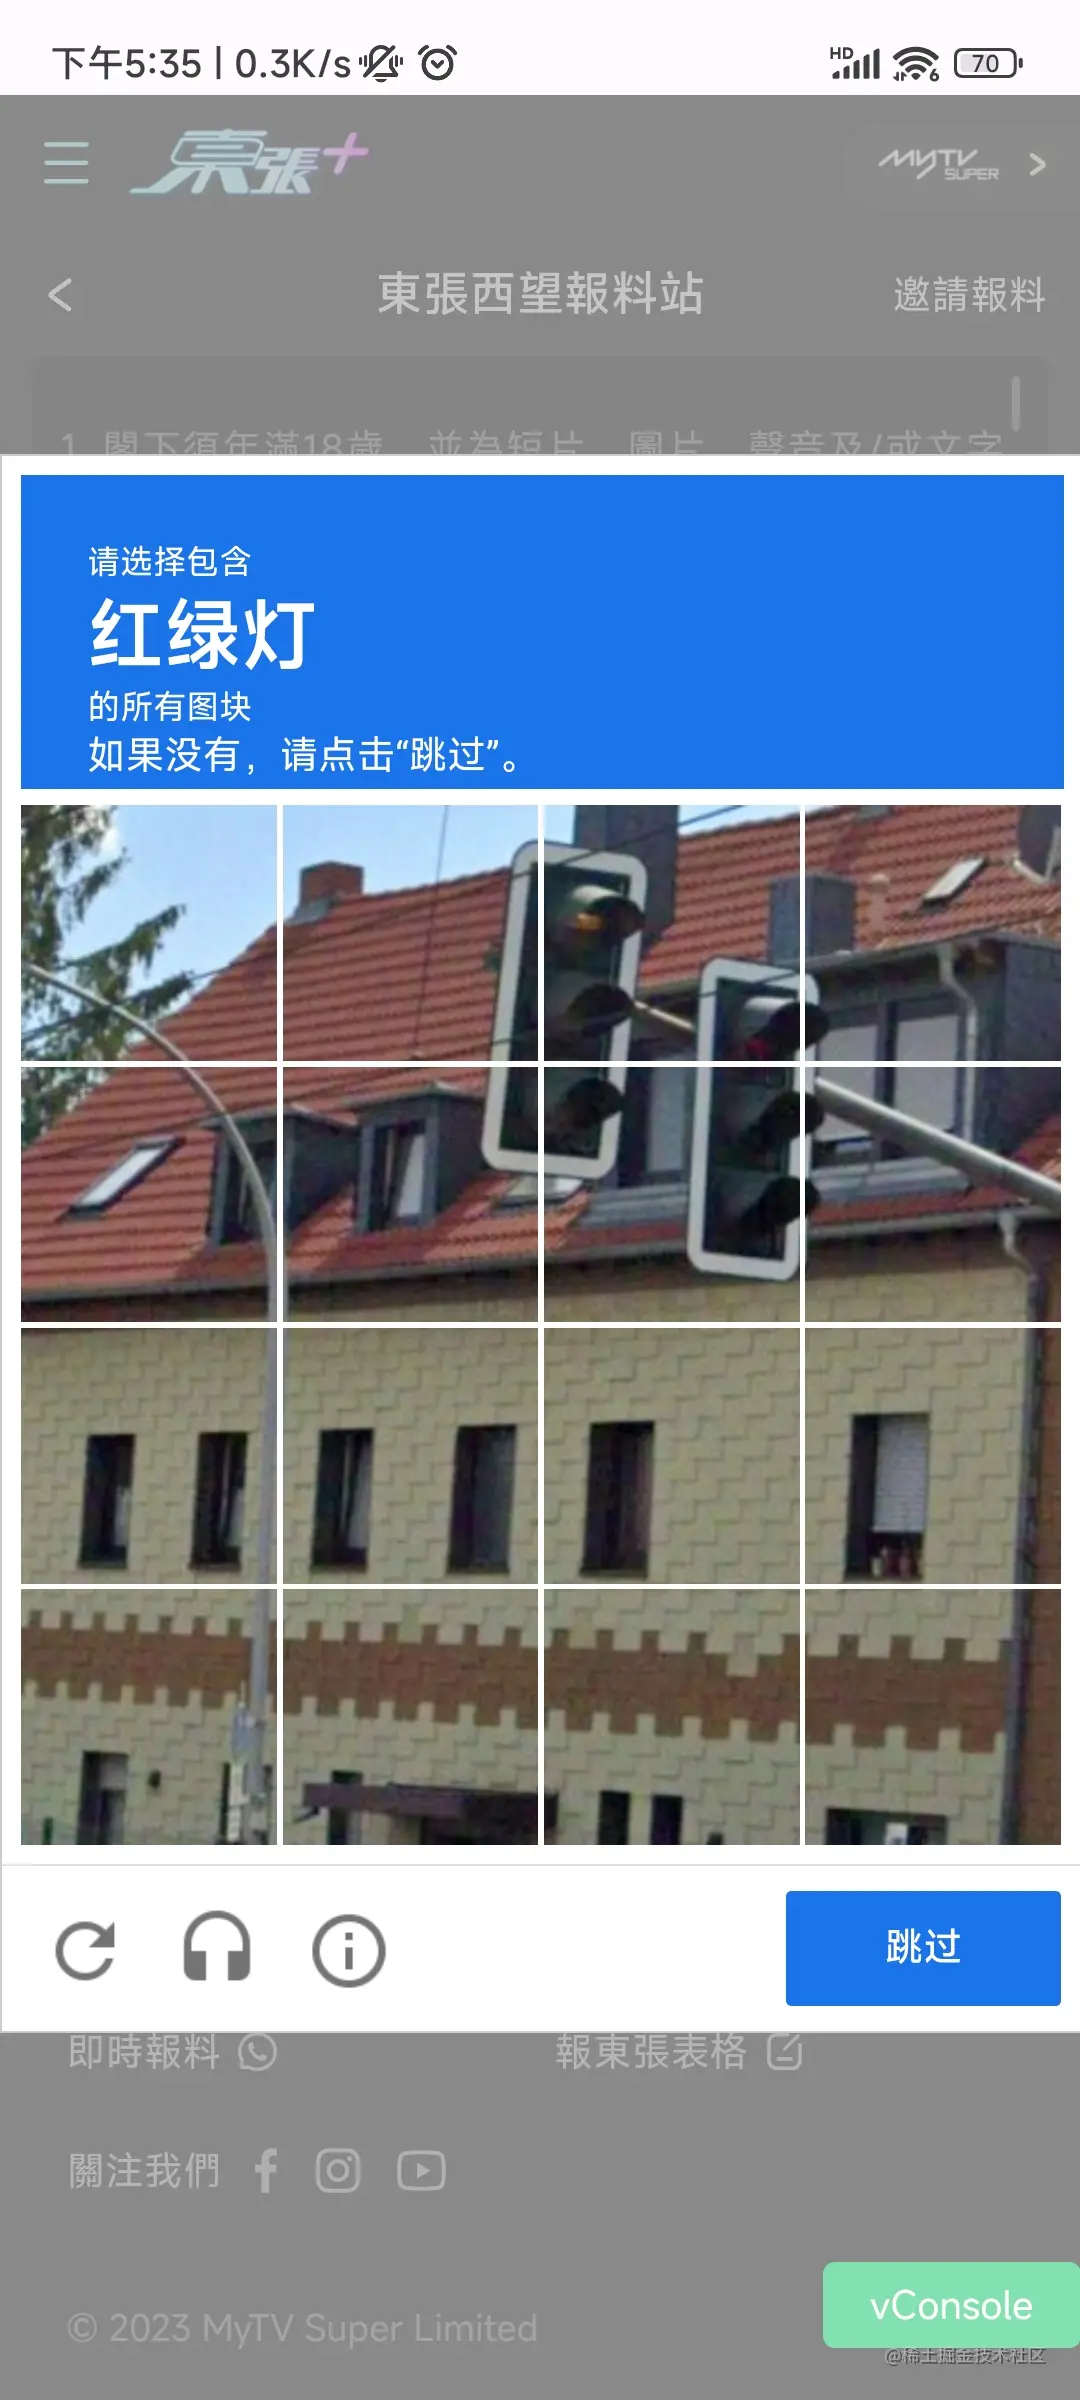 reCAPTCHA事例.jpg